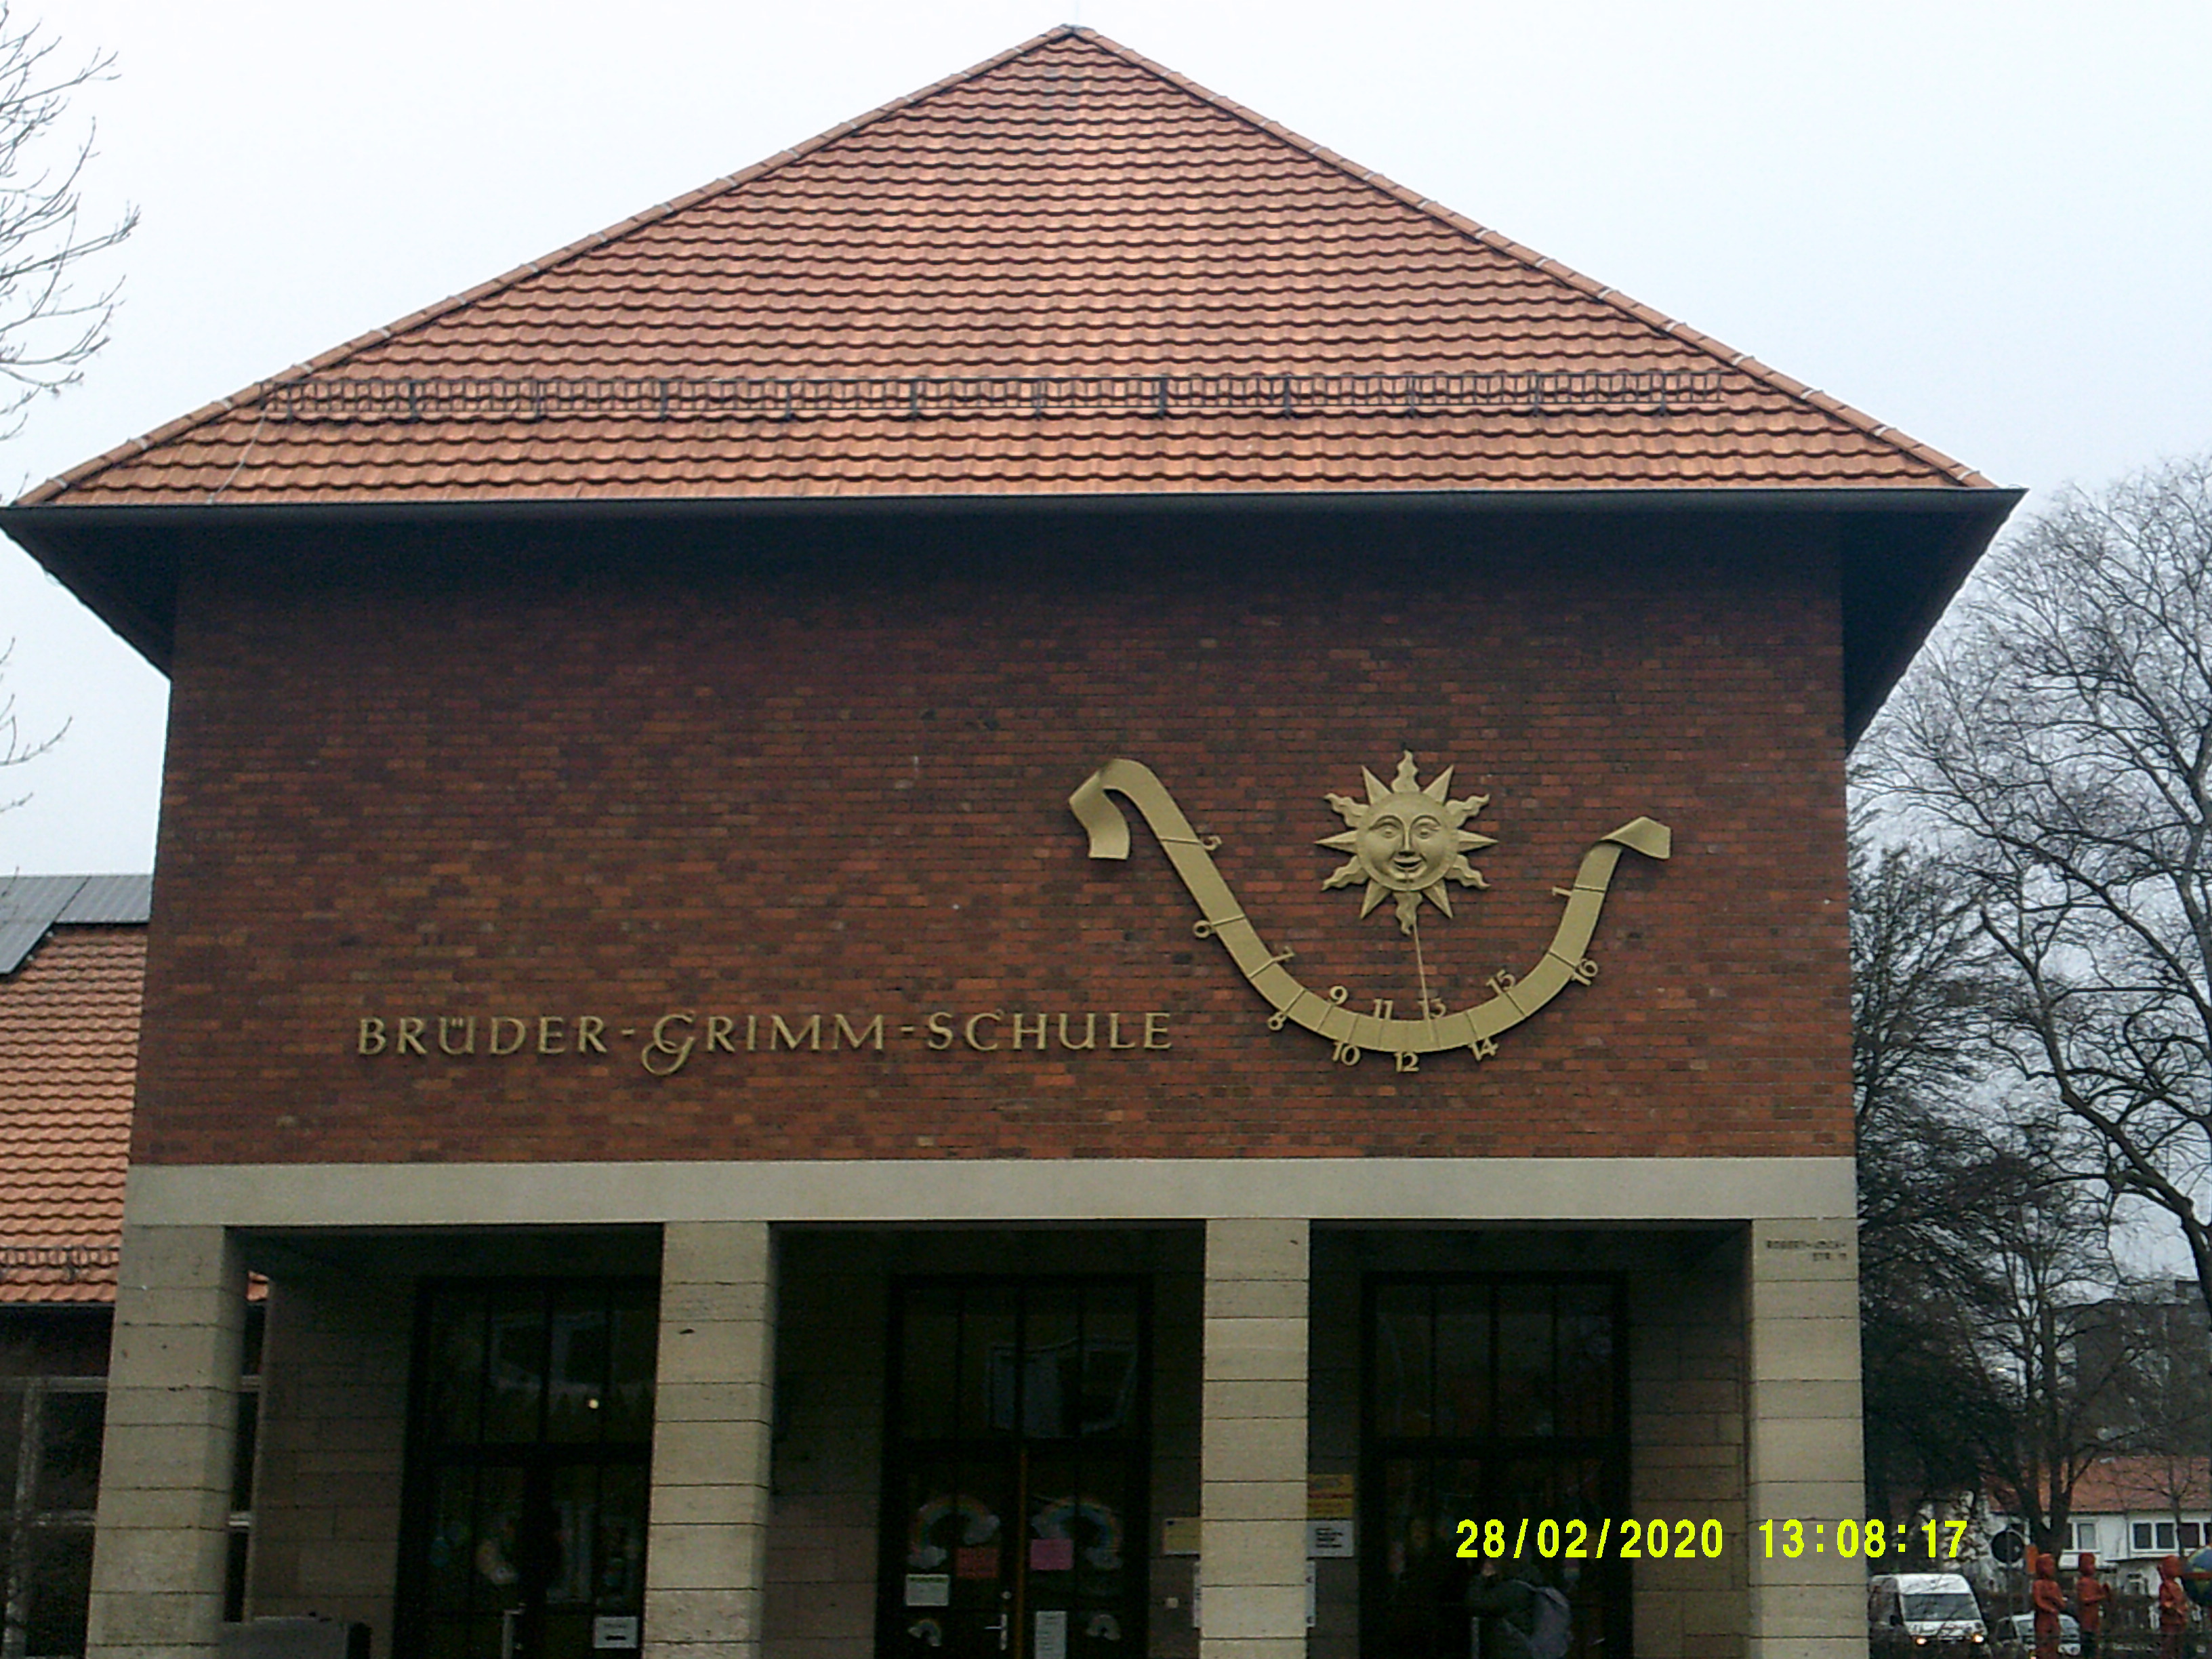 Brüder-Grimm-Schule, Göttingen, Germany 3